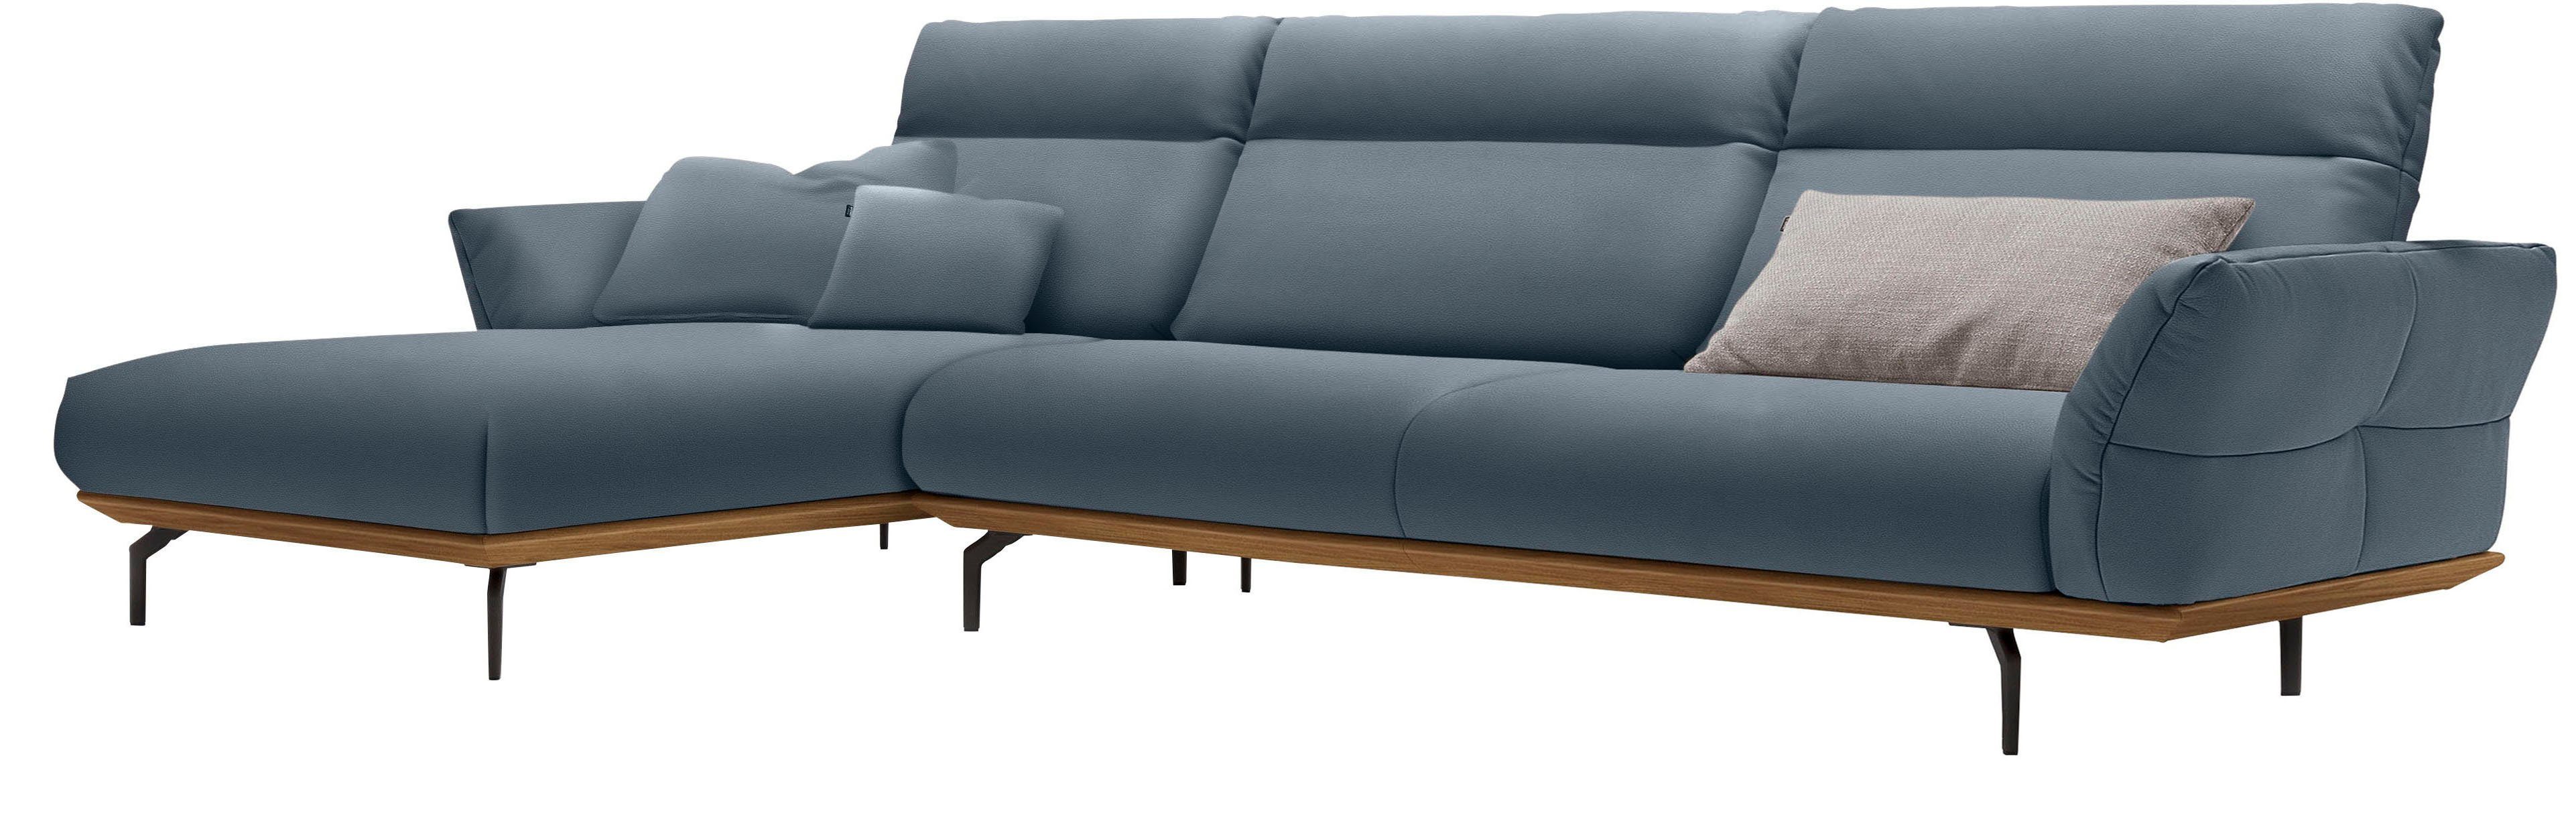 hülsta sofa Ecksofa hs.460, Sockel in in Breite Nussbaum, Umbragrau, cm 338 Winkelfüße